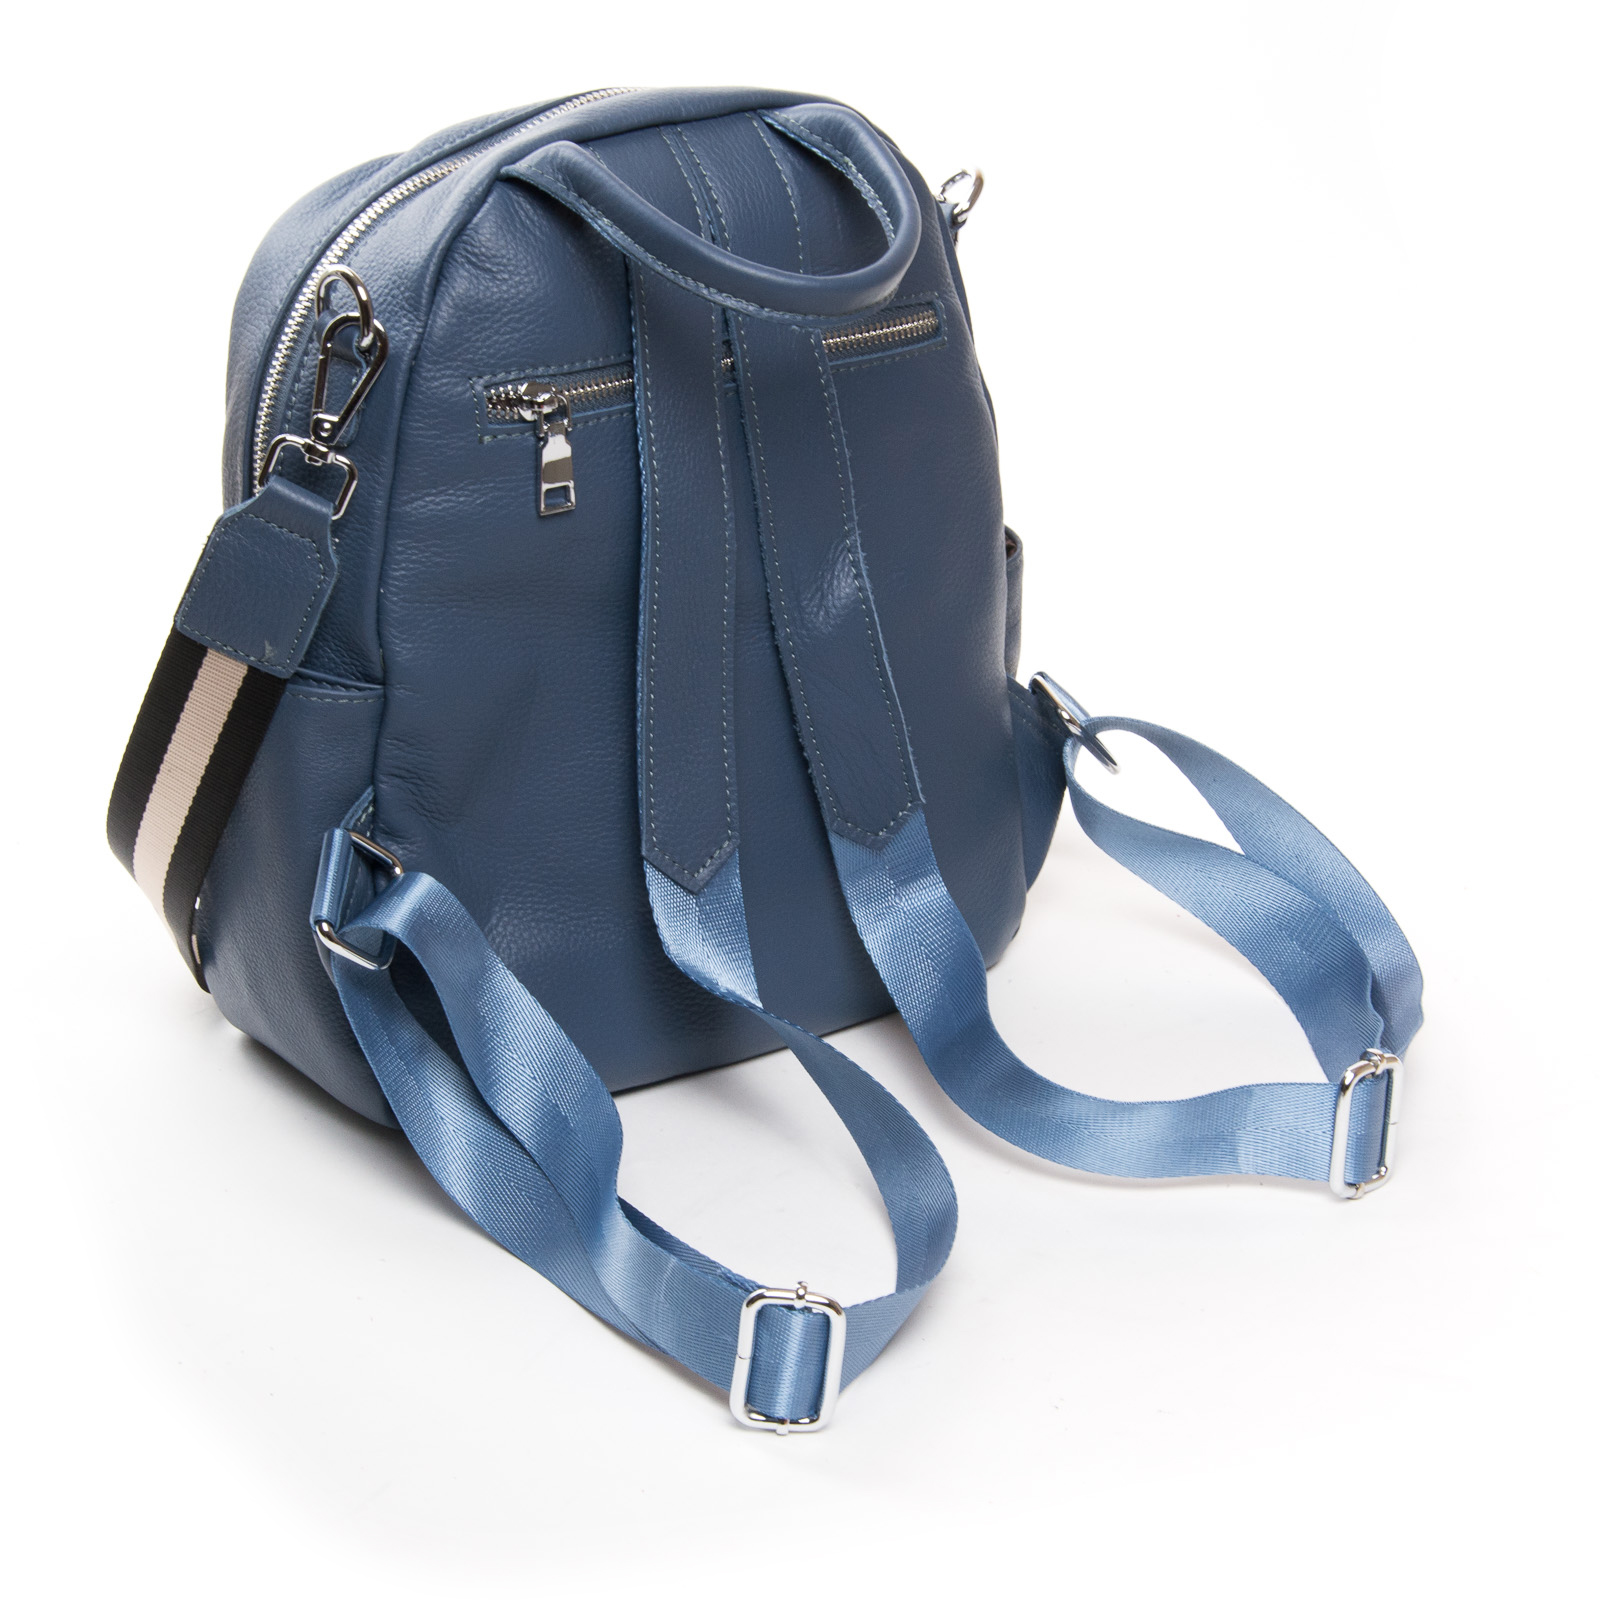 Сумка Женская Рюкзак кожа ALEX RAI 26-8905-9 l-blue